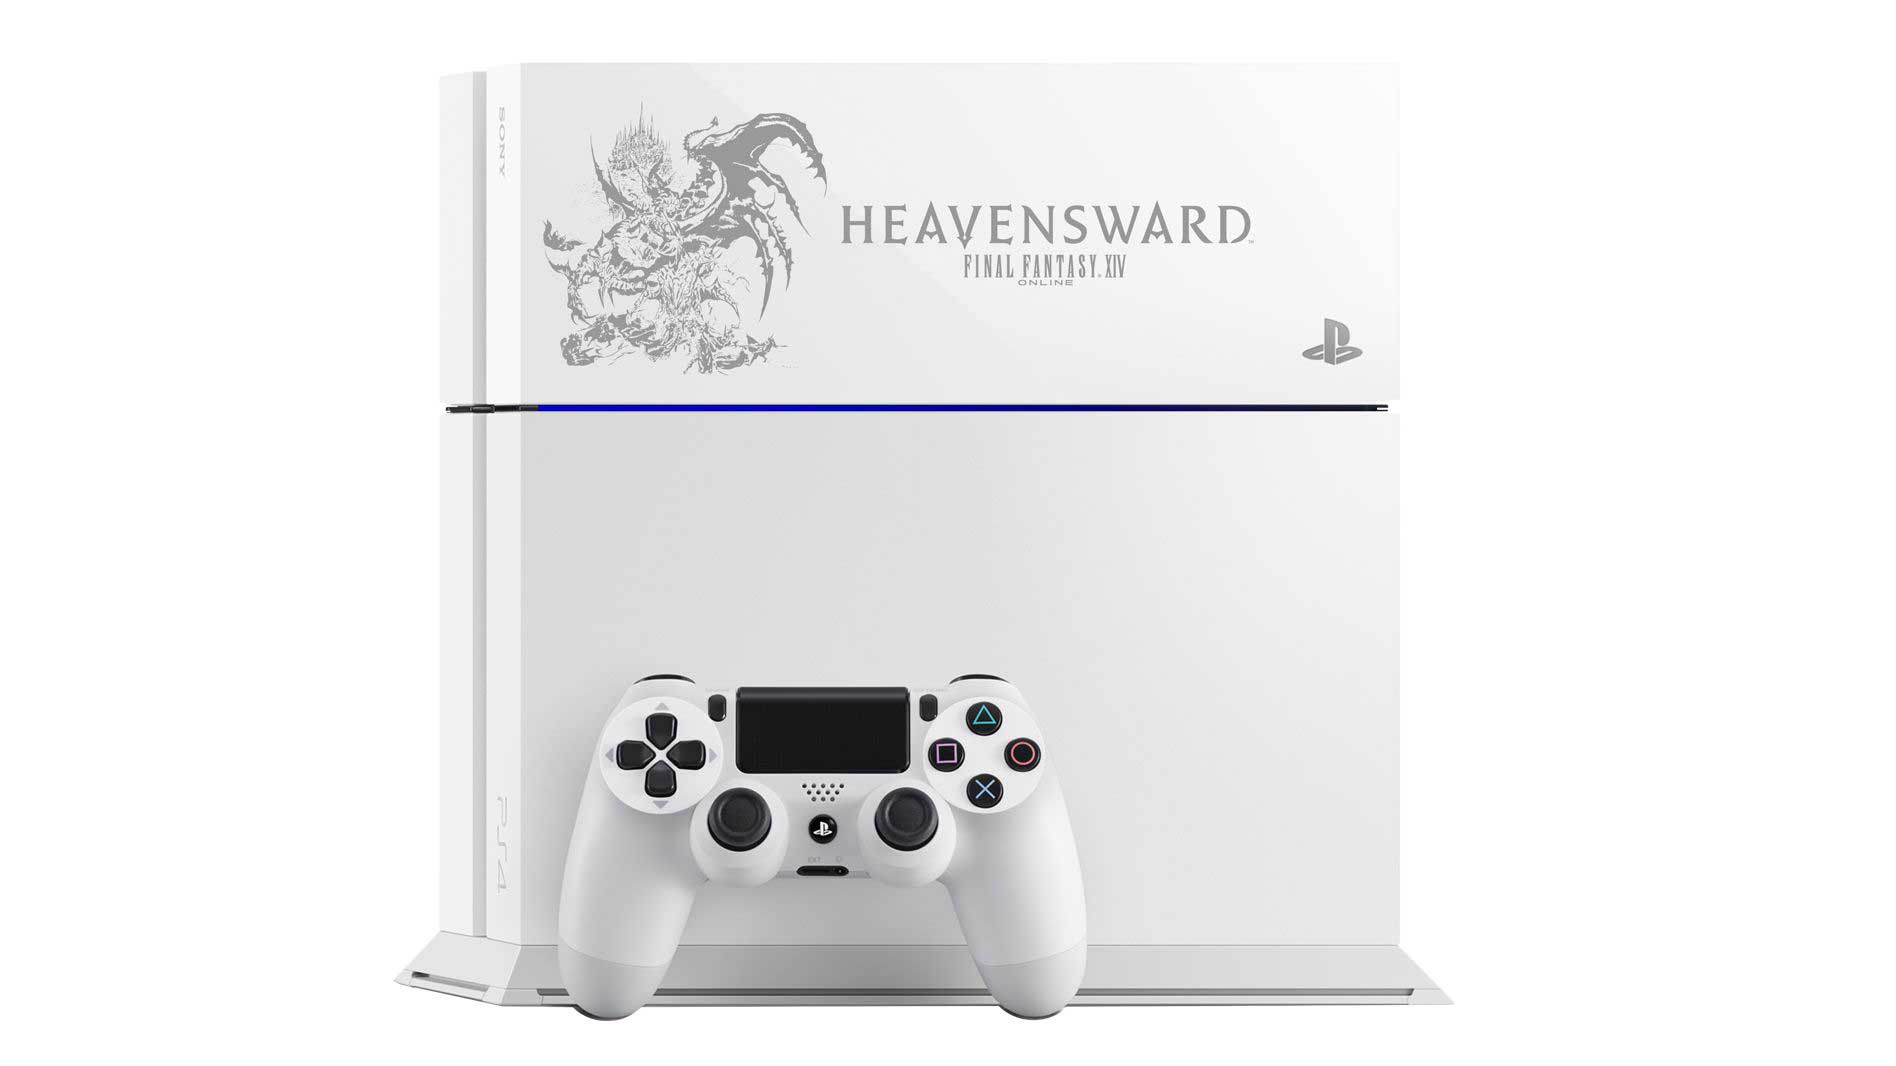 Image for Final Fantasy 14: Heavensward edition PS4, Vita and Vita TV revealed